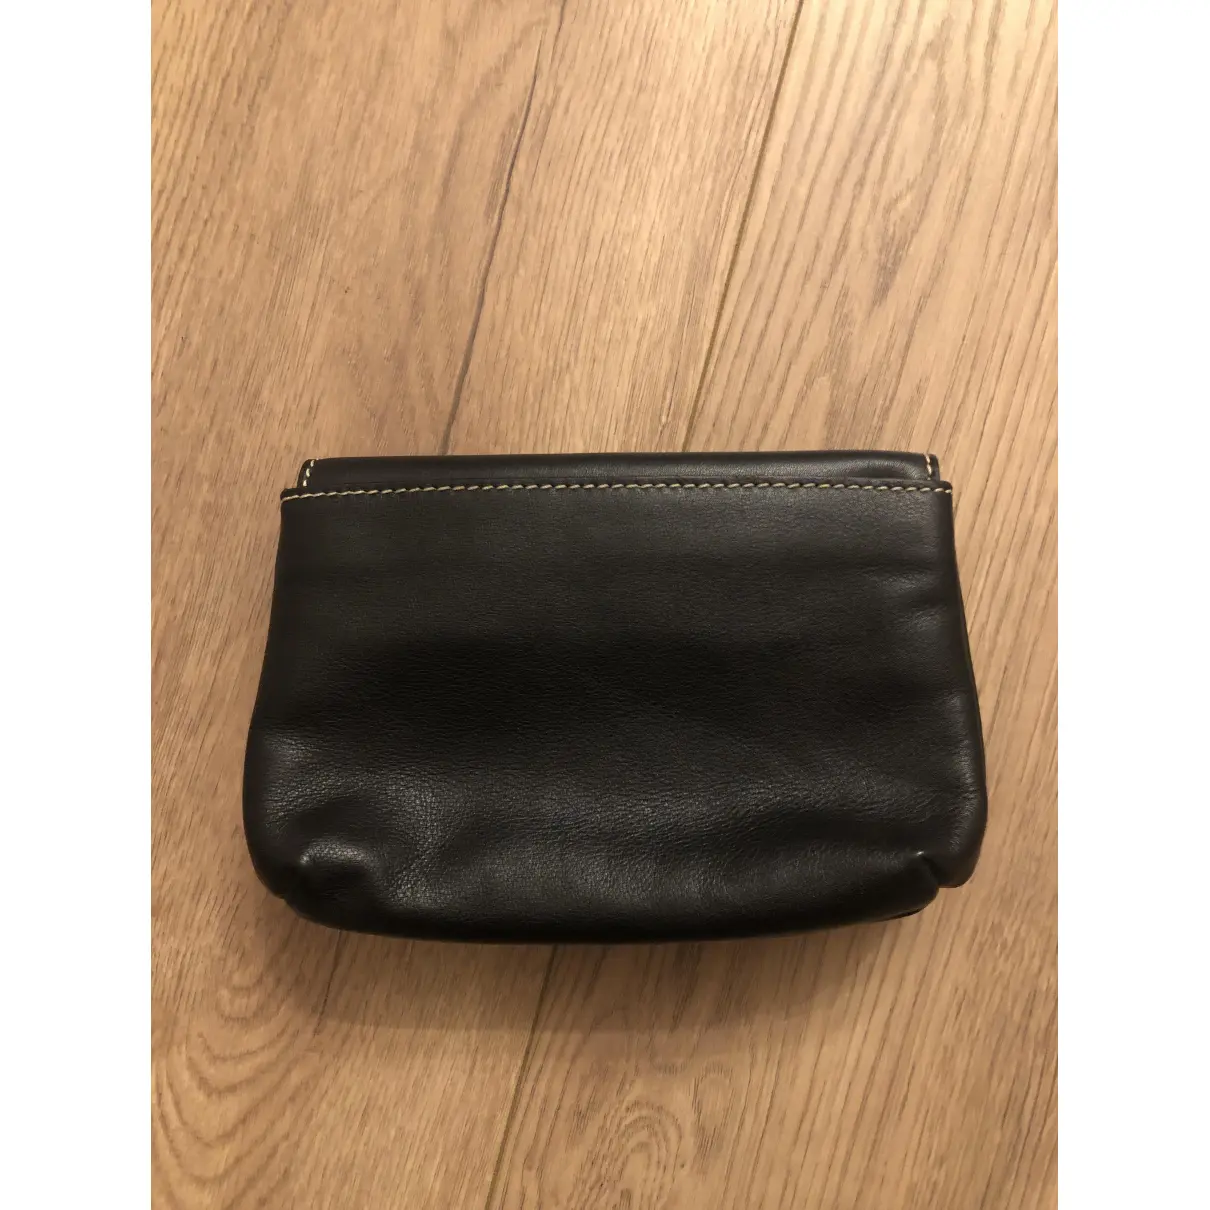 Buy Carolina Herrera Leather clutch bag online